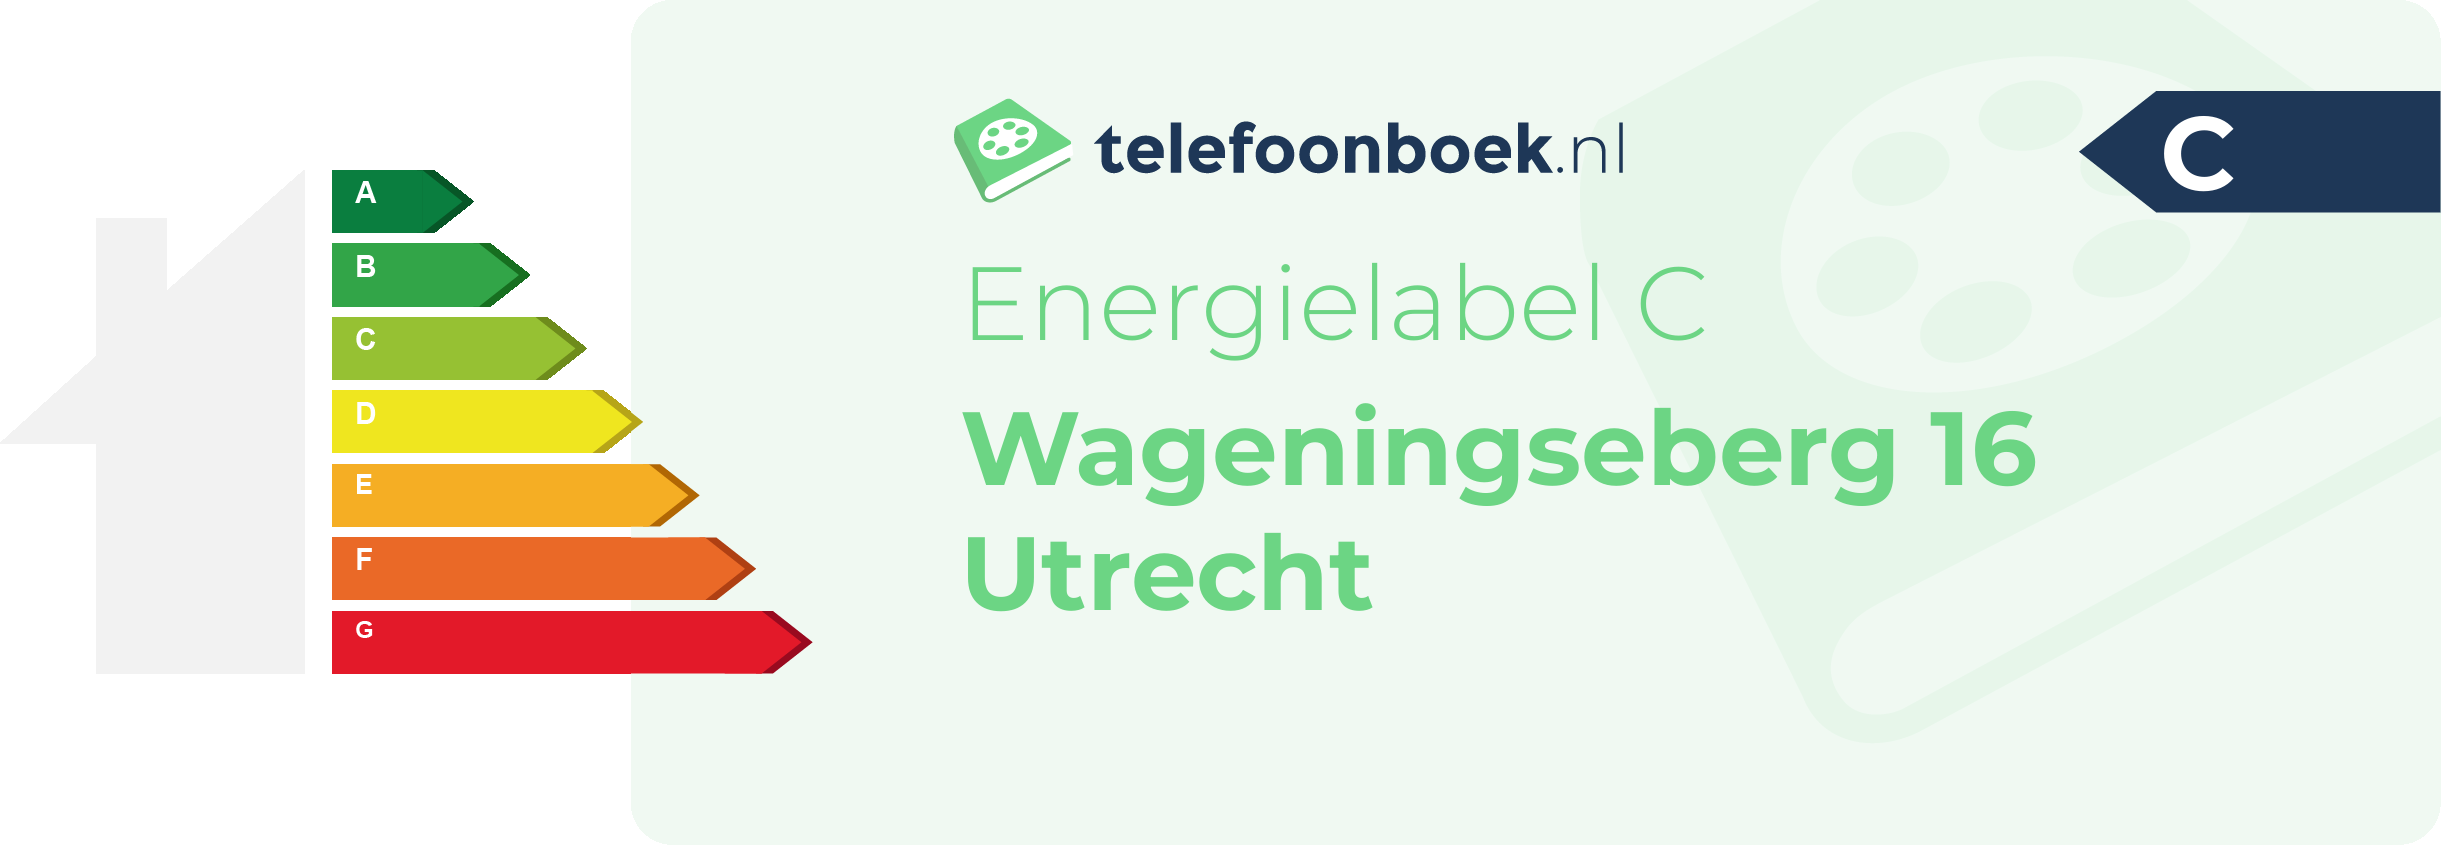 Energielabel Wageningseberg 16 Utrecht